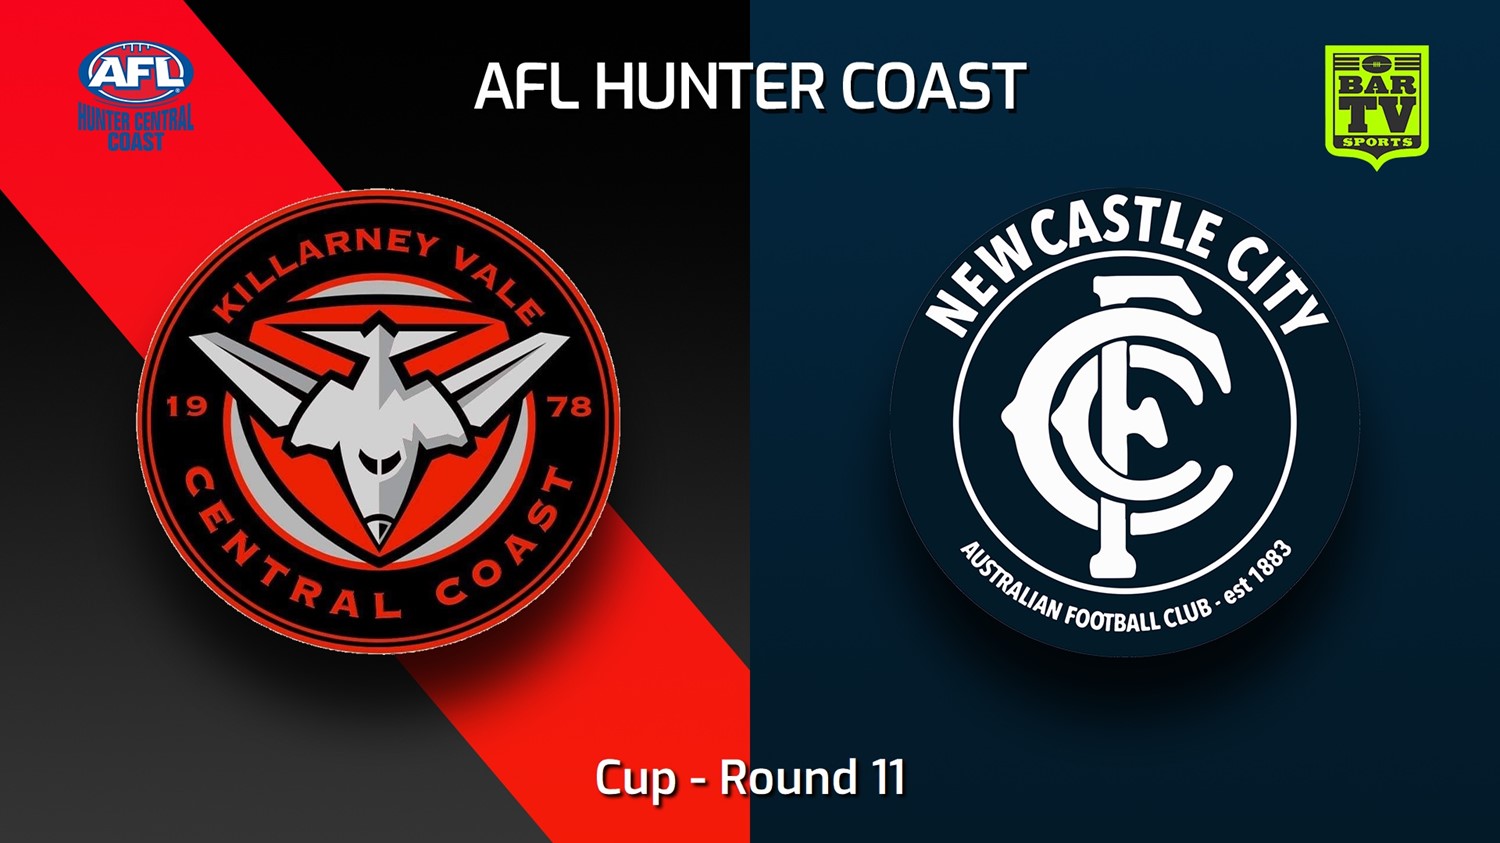 230624-AFL Hunter Central Coast Round 11 - Cup - Killarney Vale Bombers v Newcastle City  Minigame Slate Image